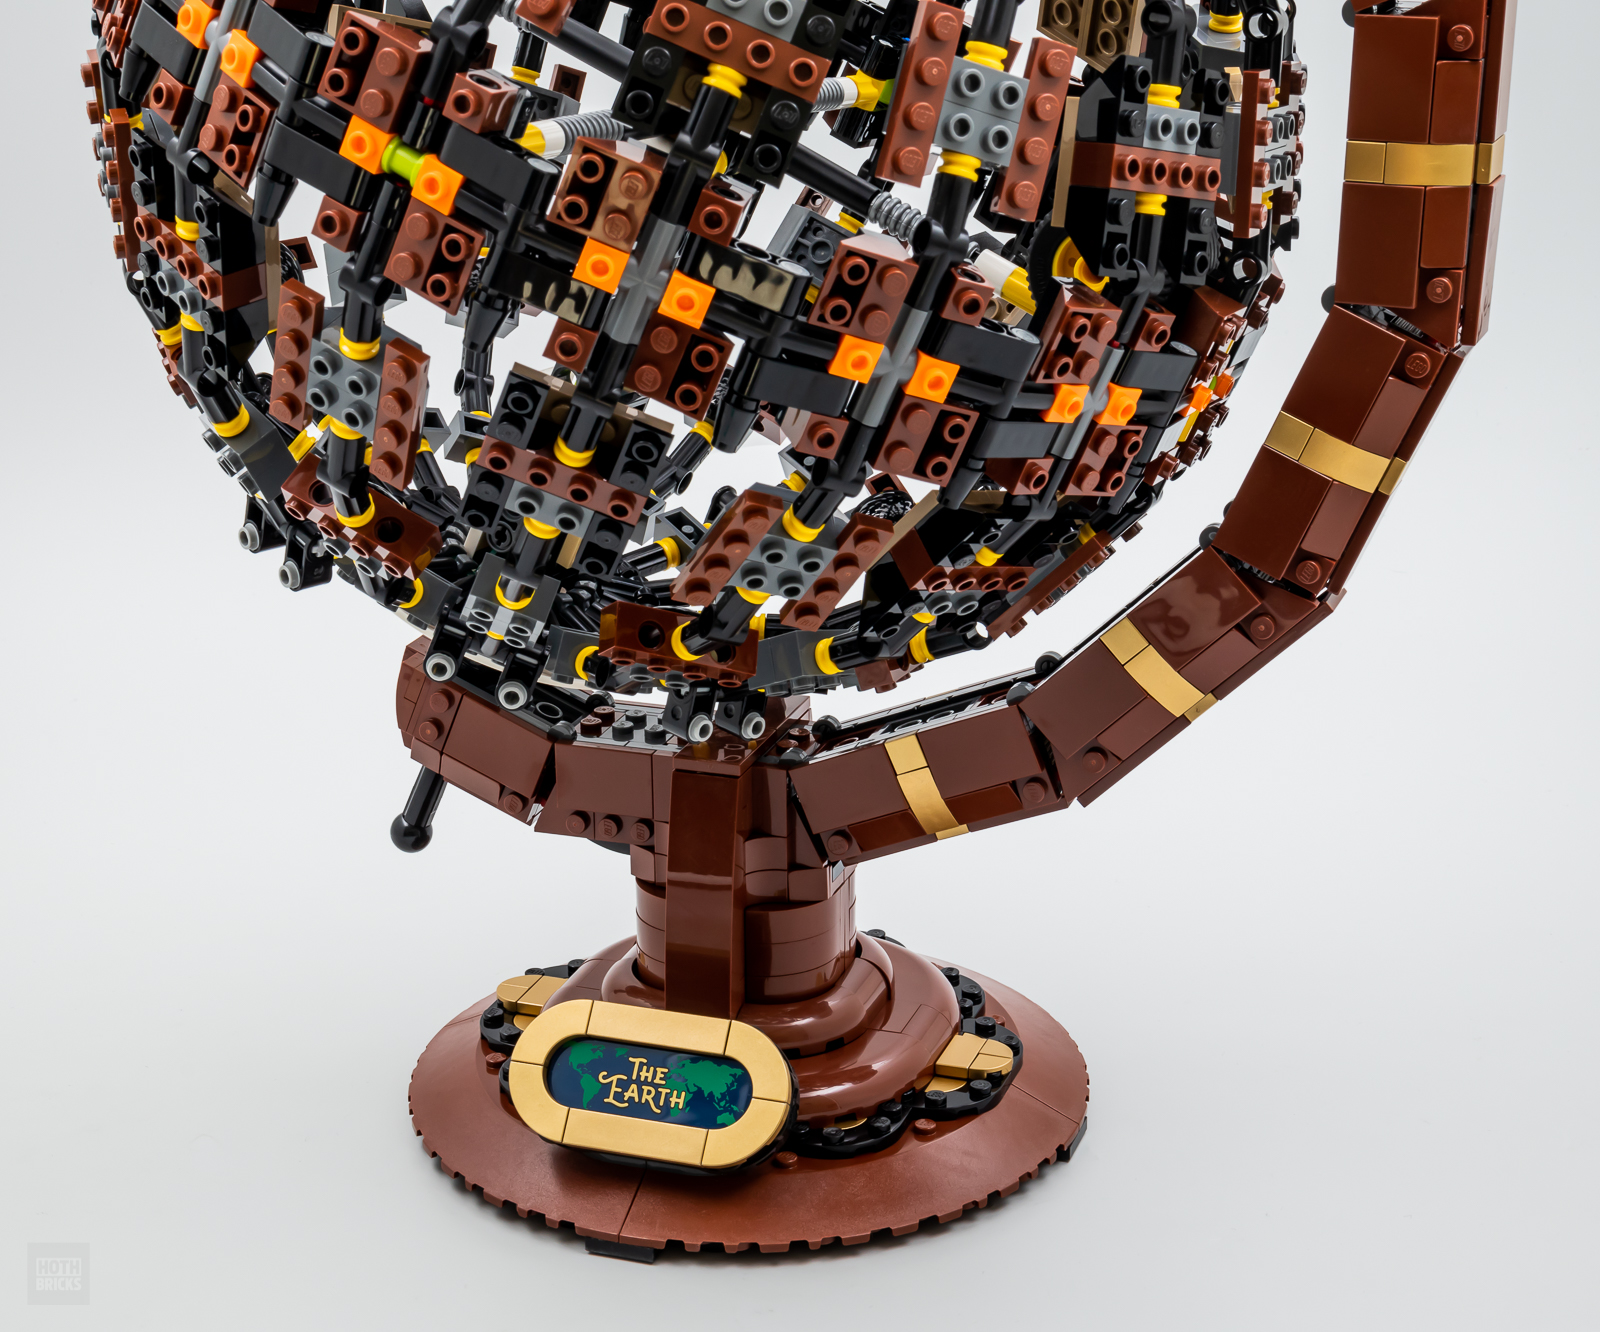 ▻ Review : LEGO Ideas 21332 The Globe - HOTH BRICKS